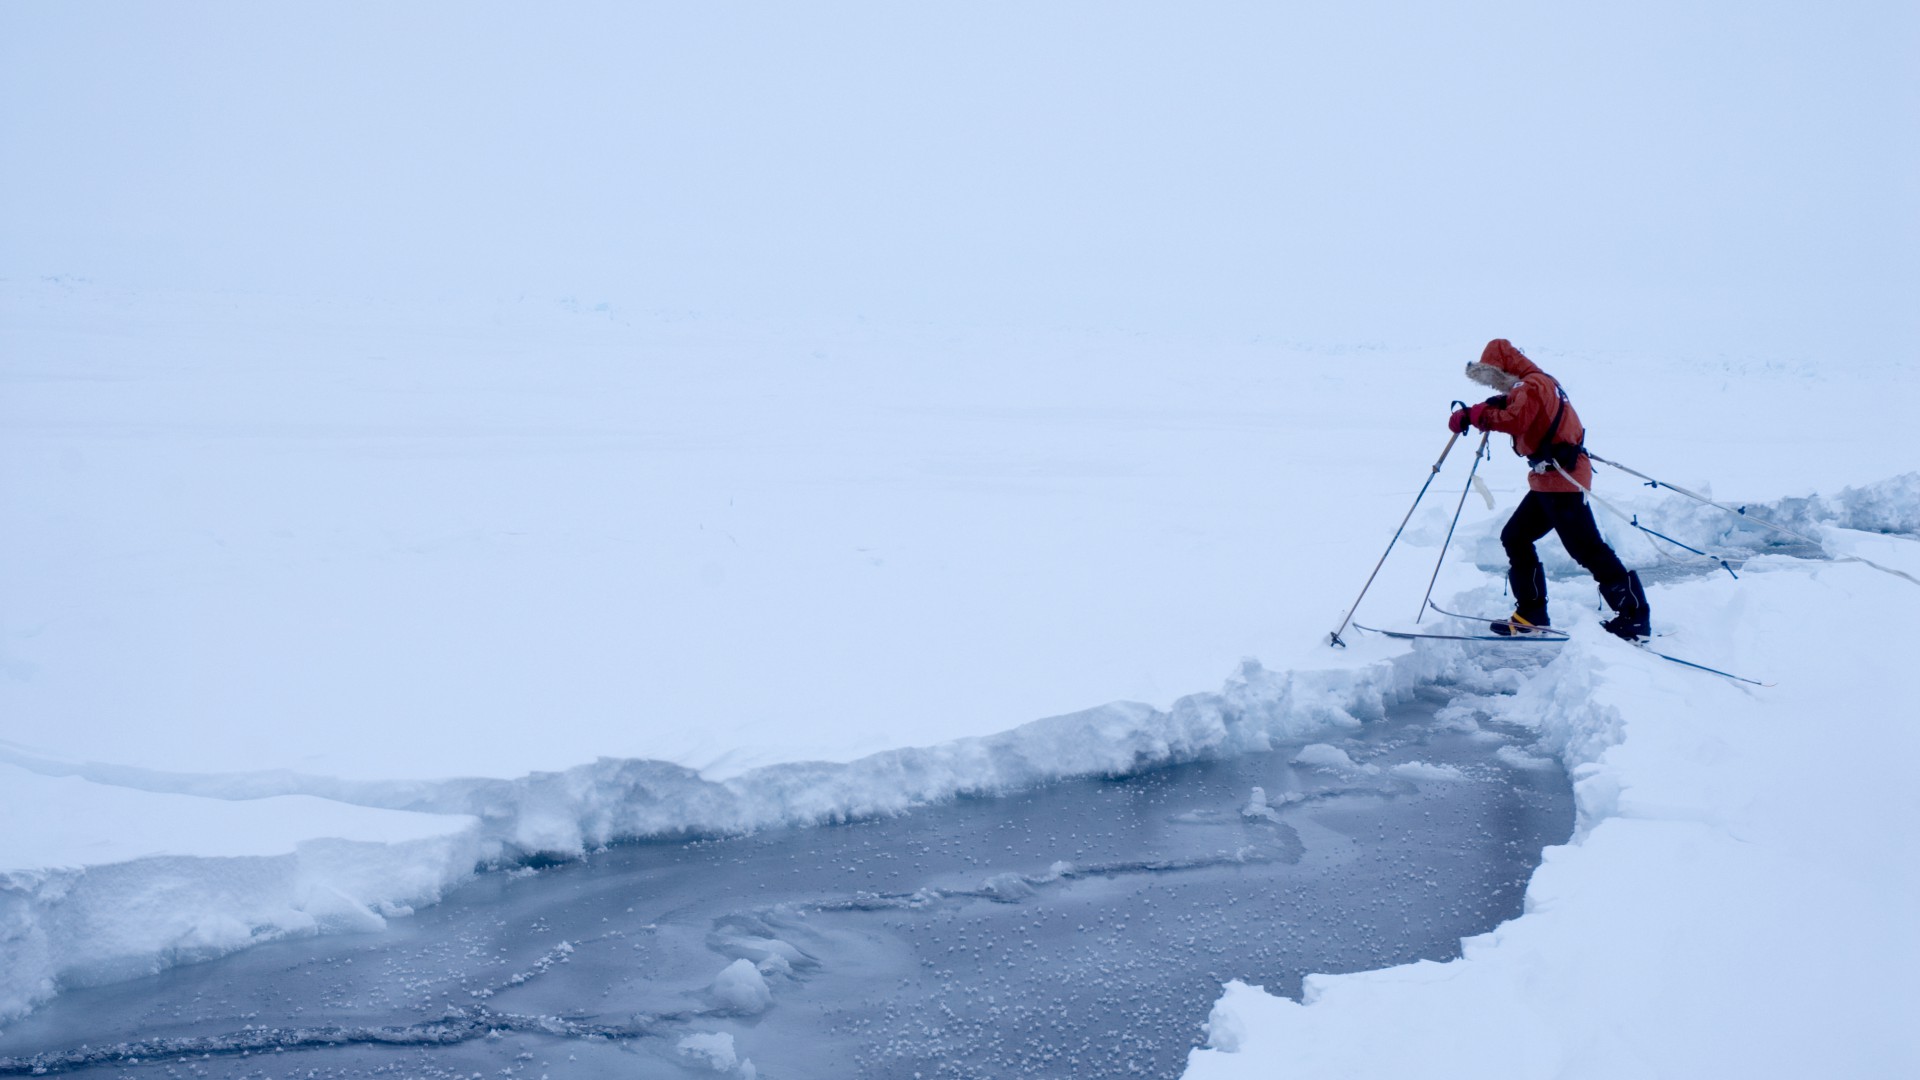 Зима, 4k, HD, лыжник, экстрим, Winter, 4k, HD wallpaper, extreme, National Geographic (horizontal)